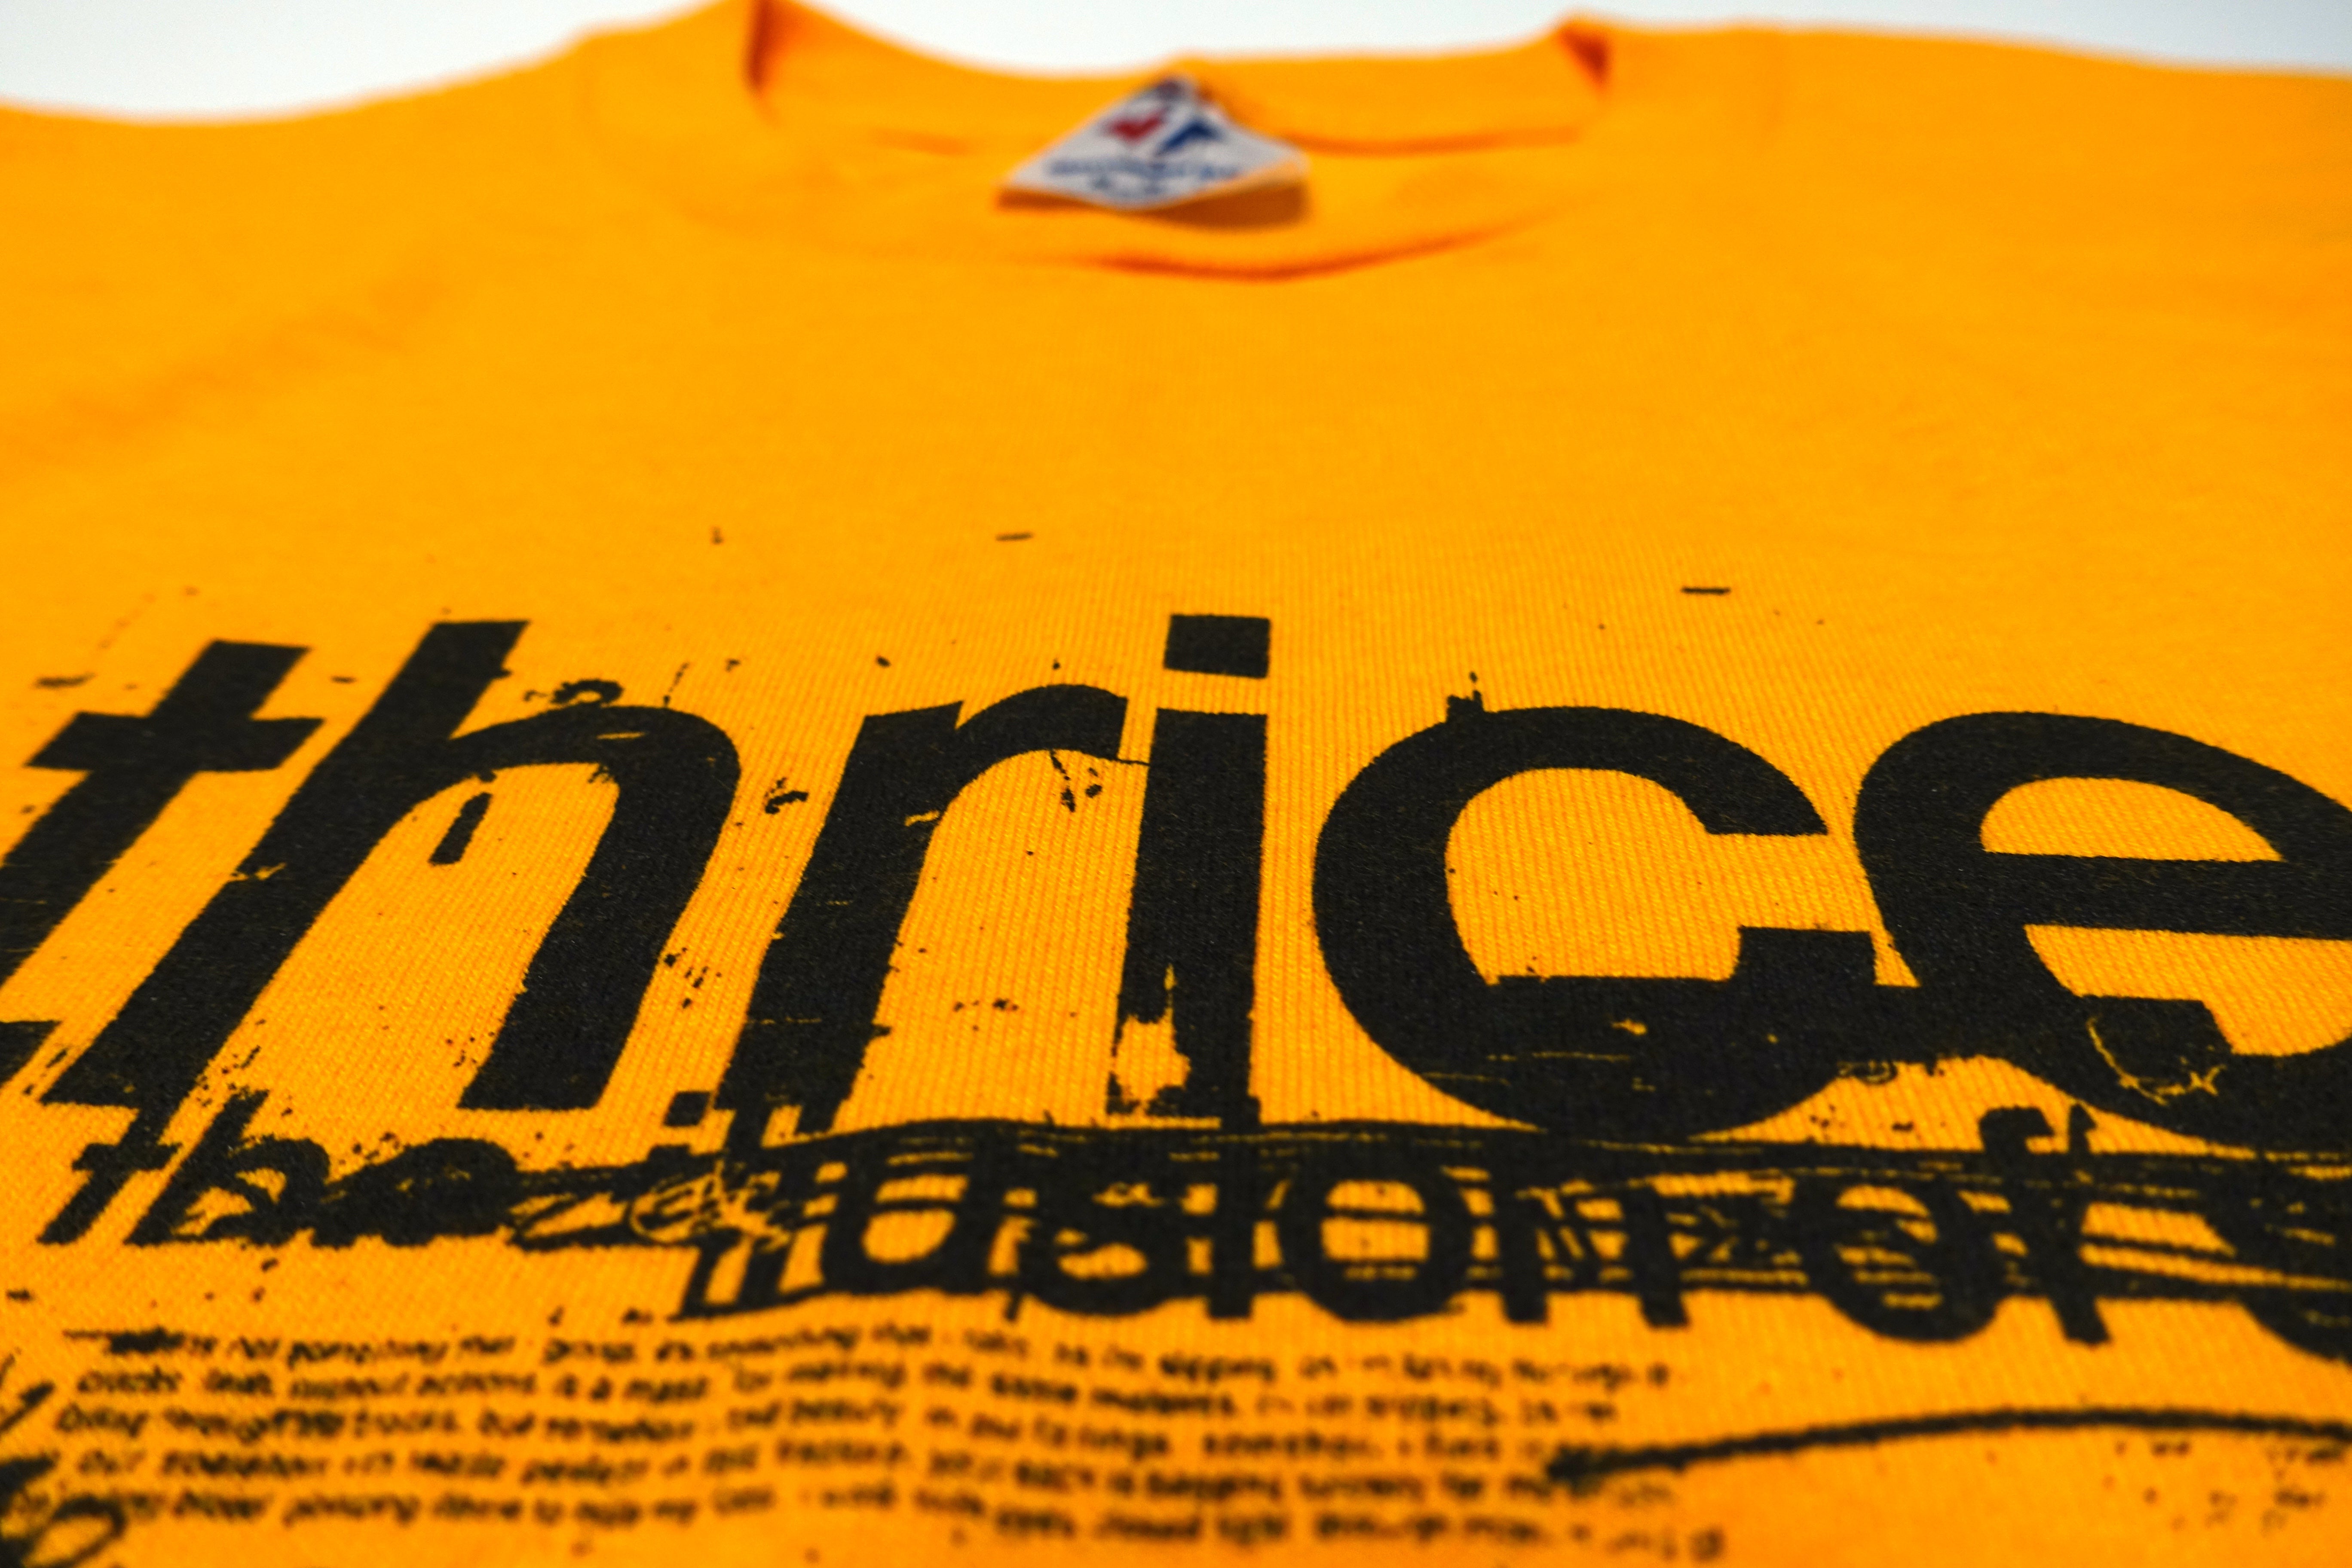 Thrice - The Illusion Of Safety 2002 Tour Shirt Size Medium